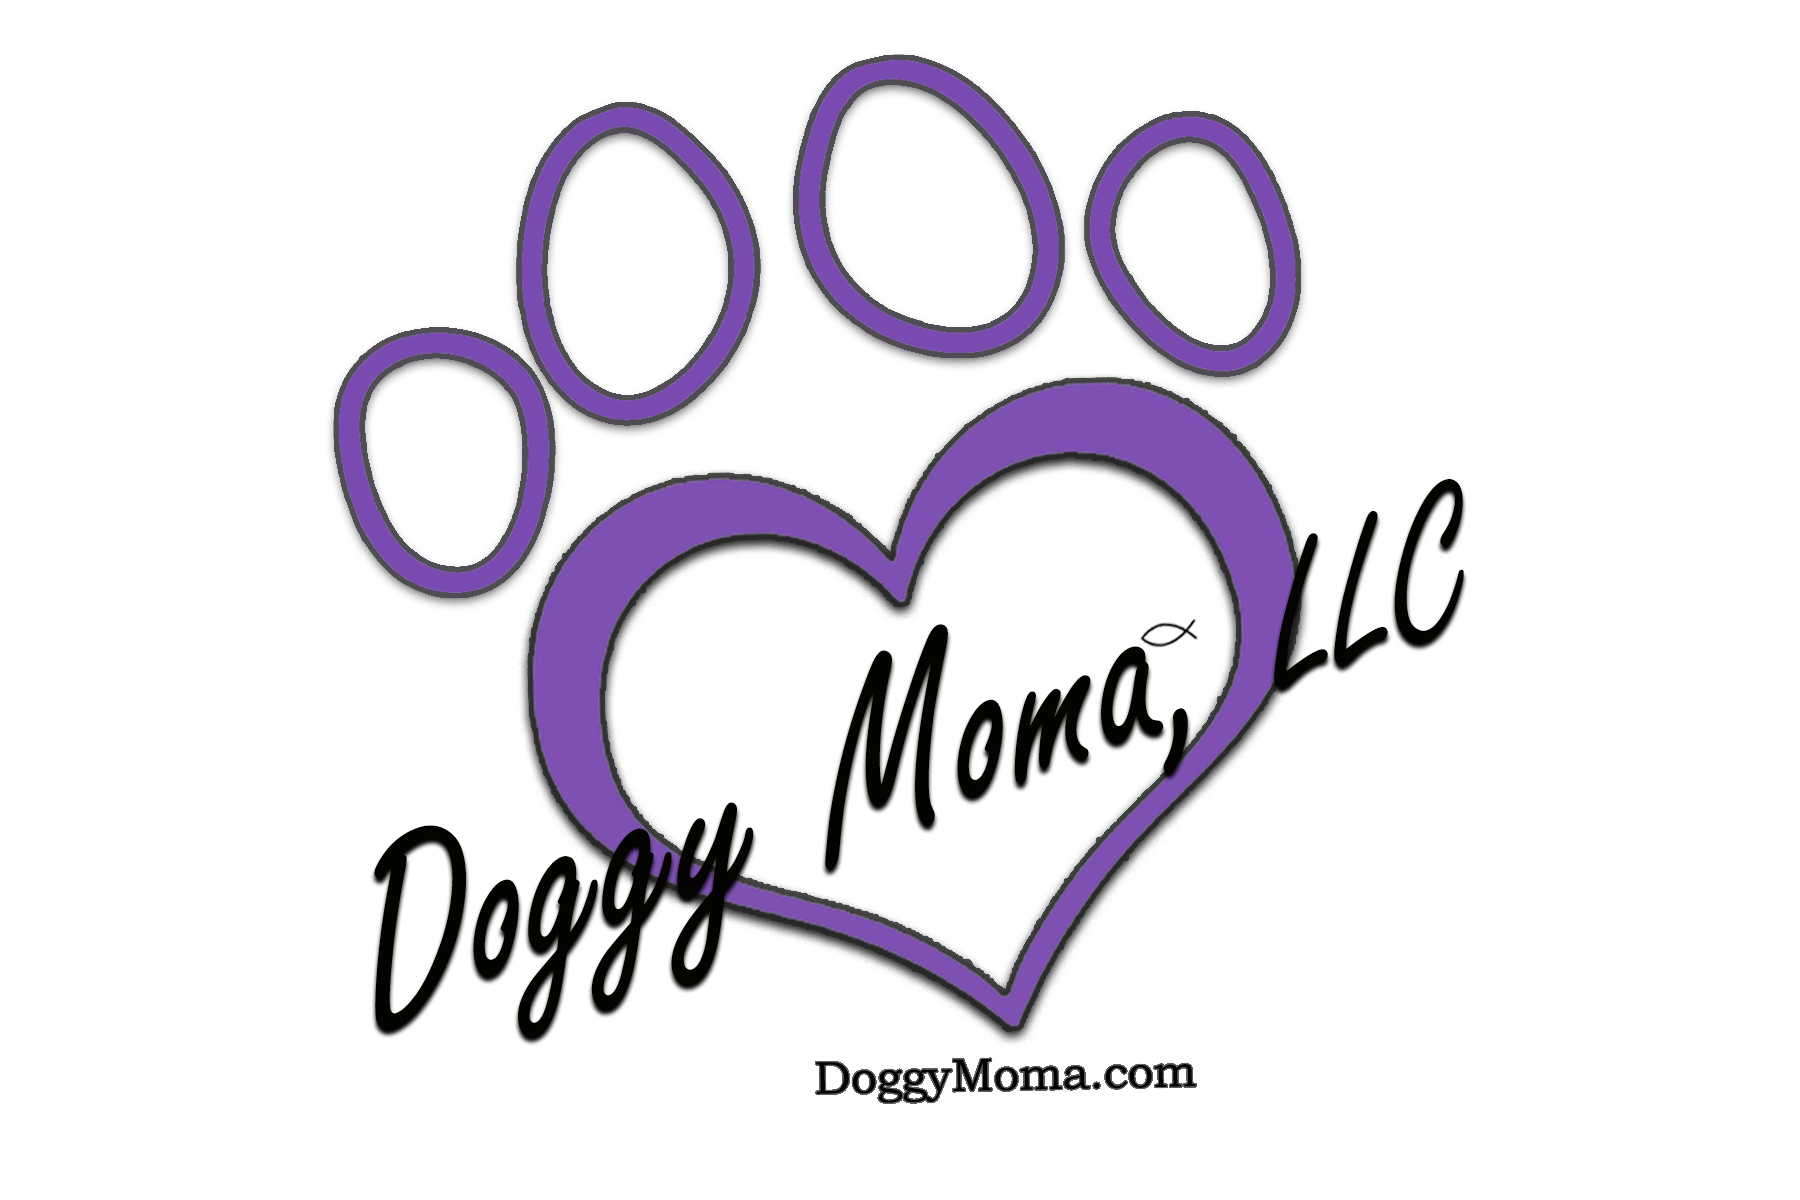 Doggy Moma, LLC